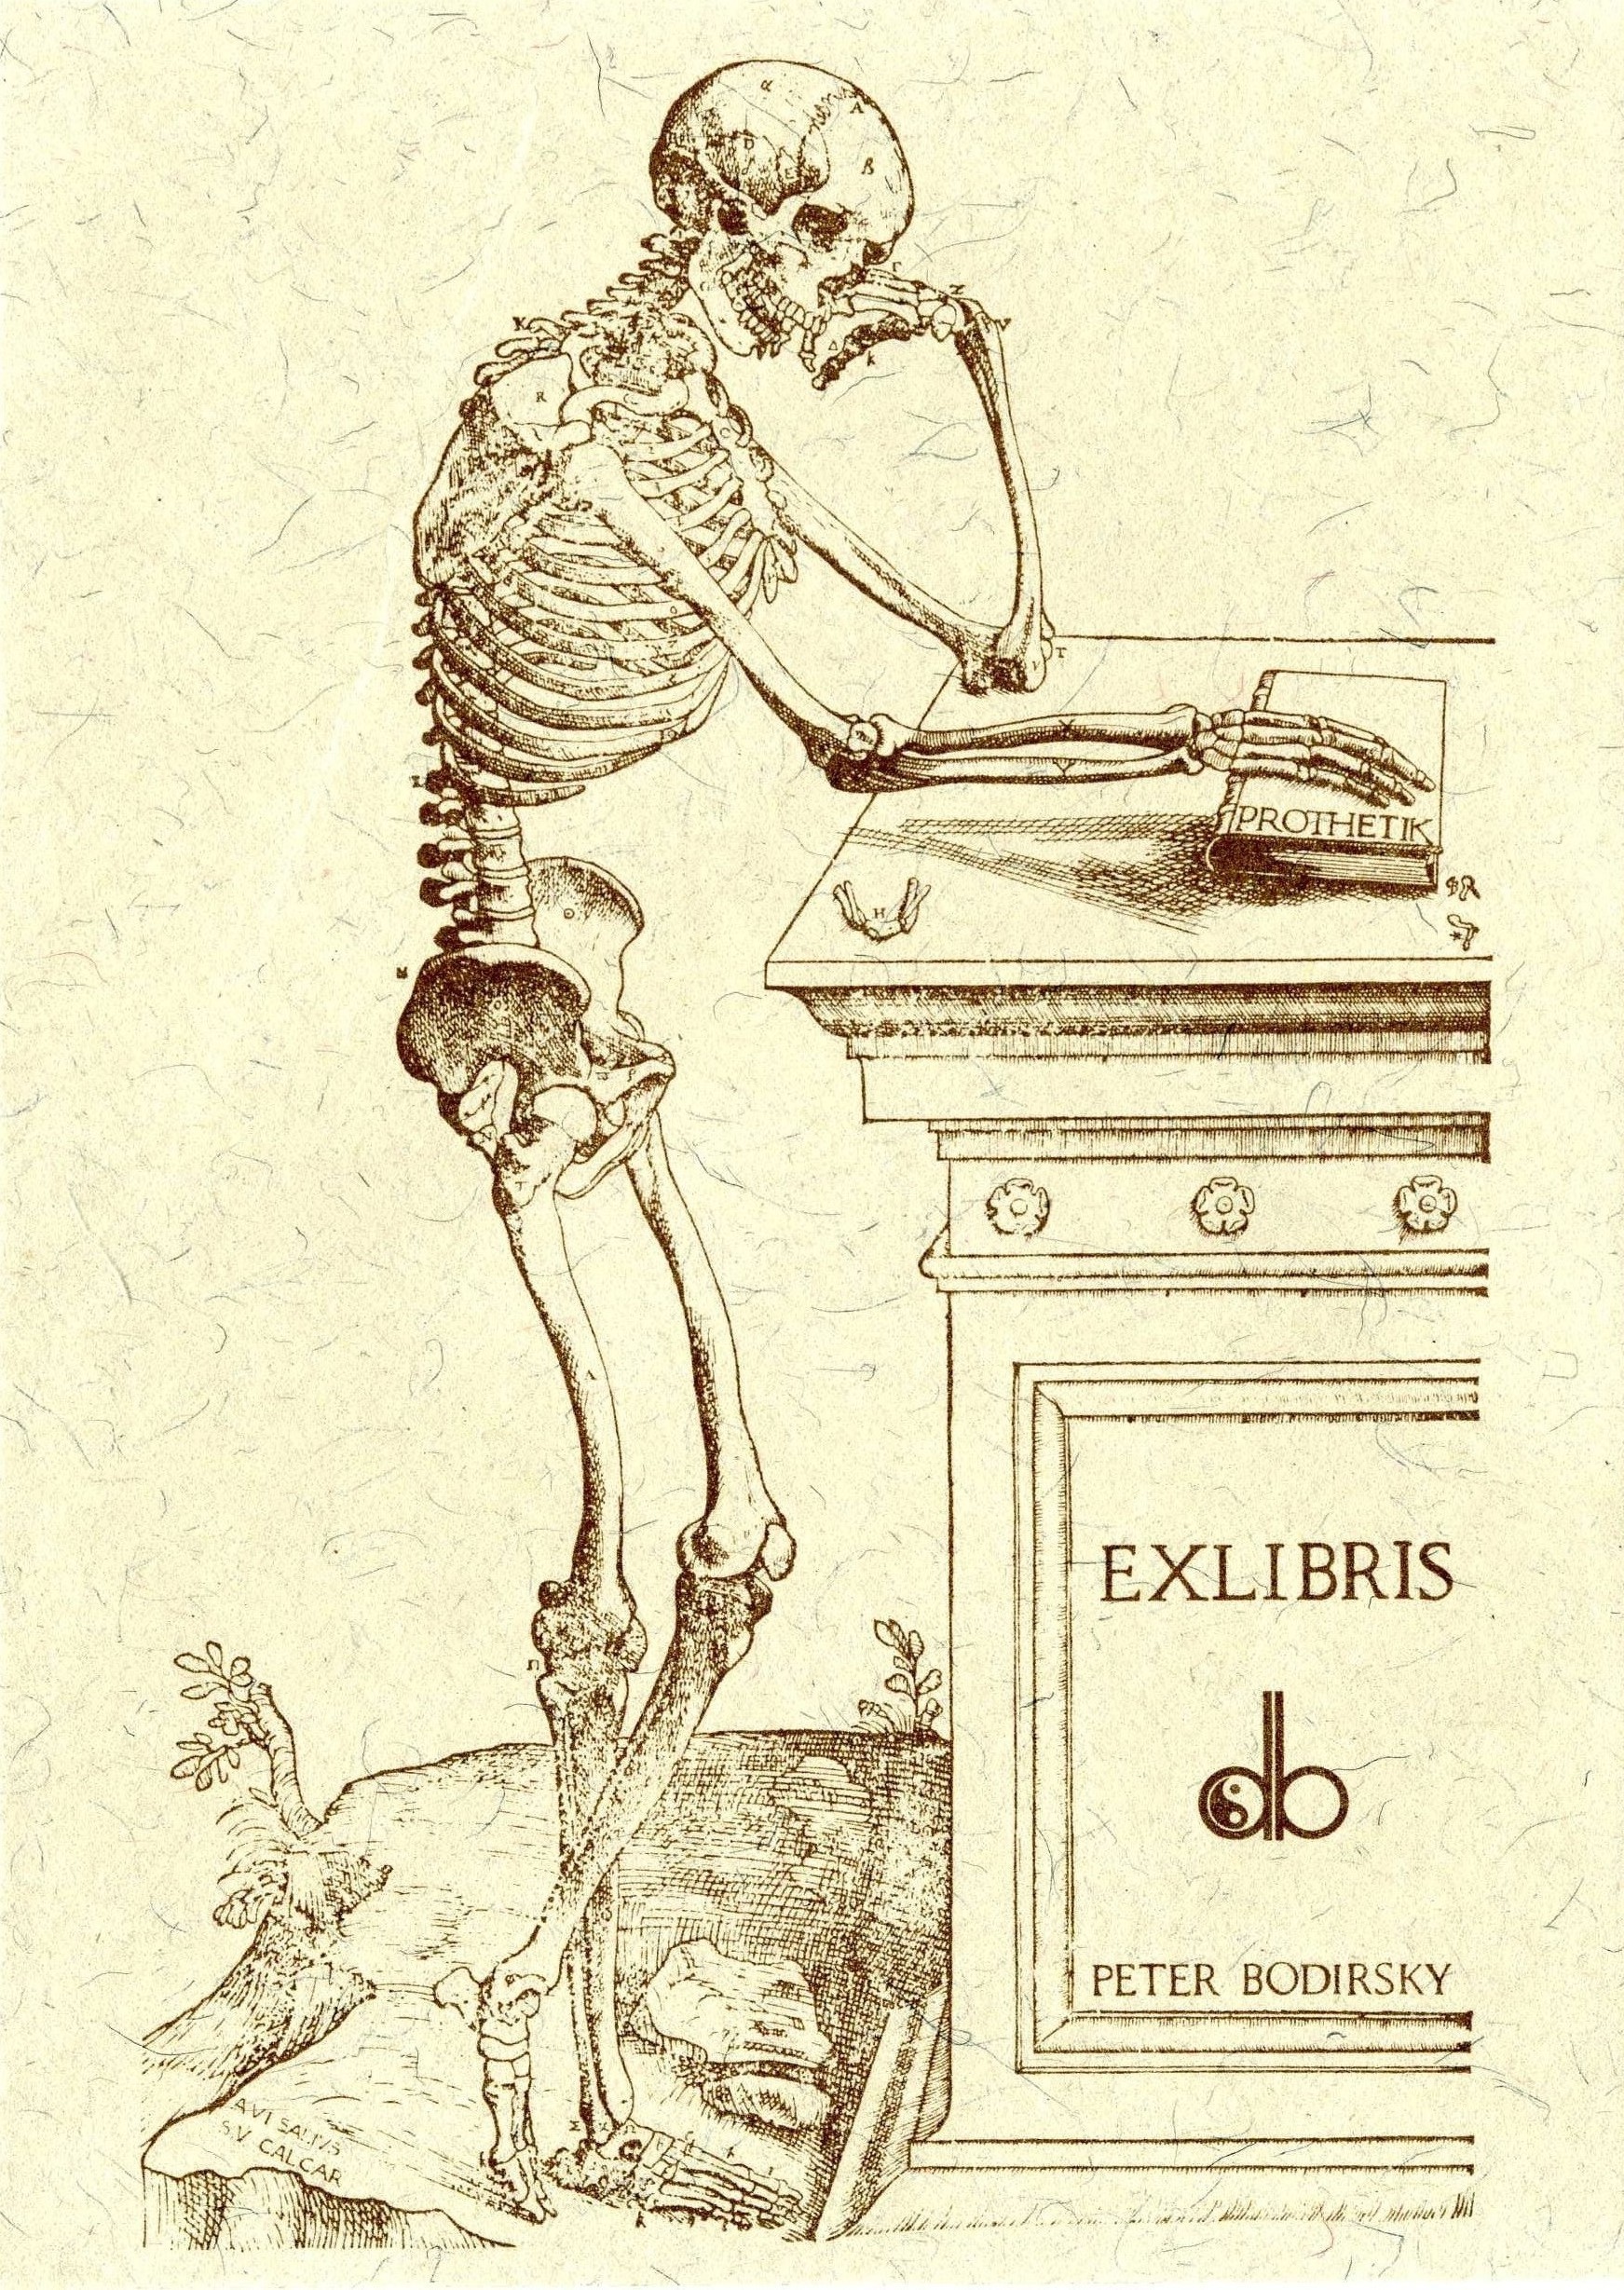 Exlibris "db" (Peter Bodirsky) (Museum für Sepulkralkultur CC BY-NC-SA)